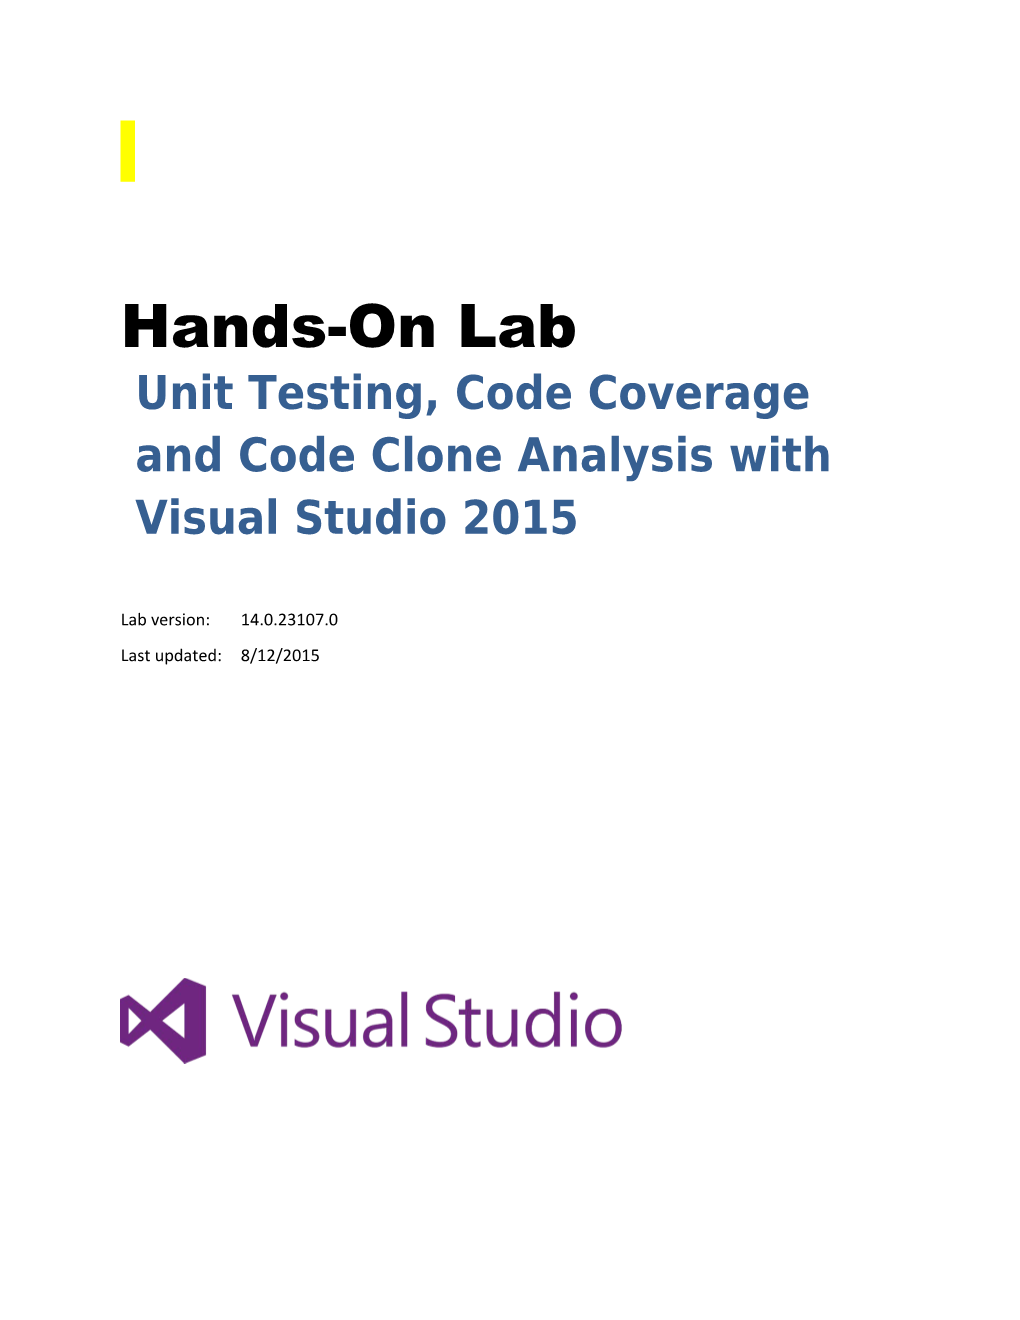 Unit Testing, Code Coverageand Code Clone Analysis with Visual Studio 2015